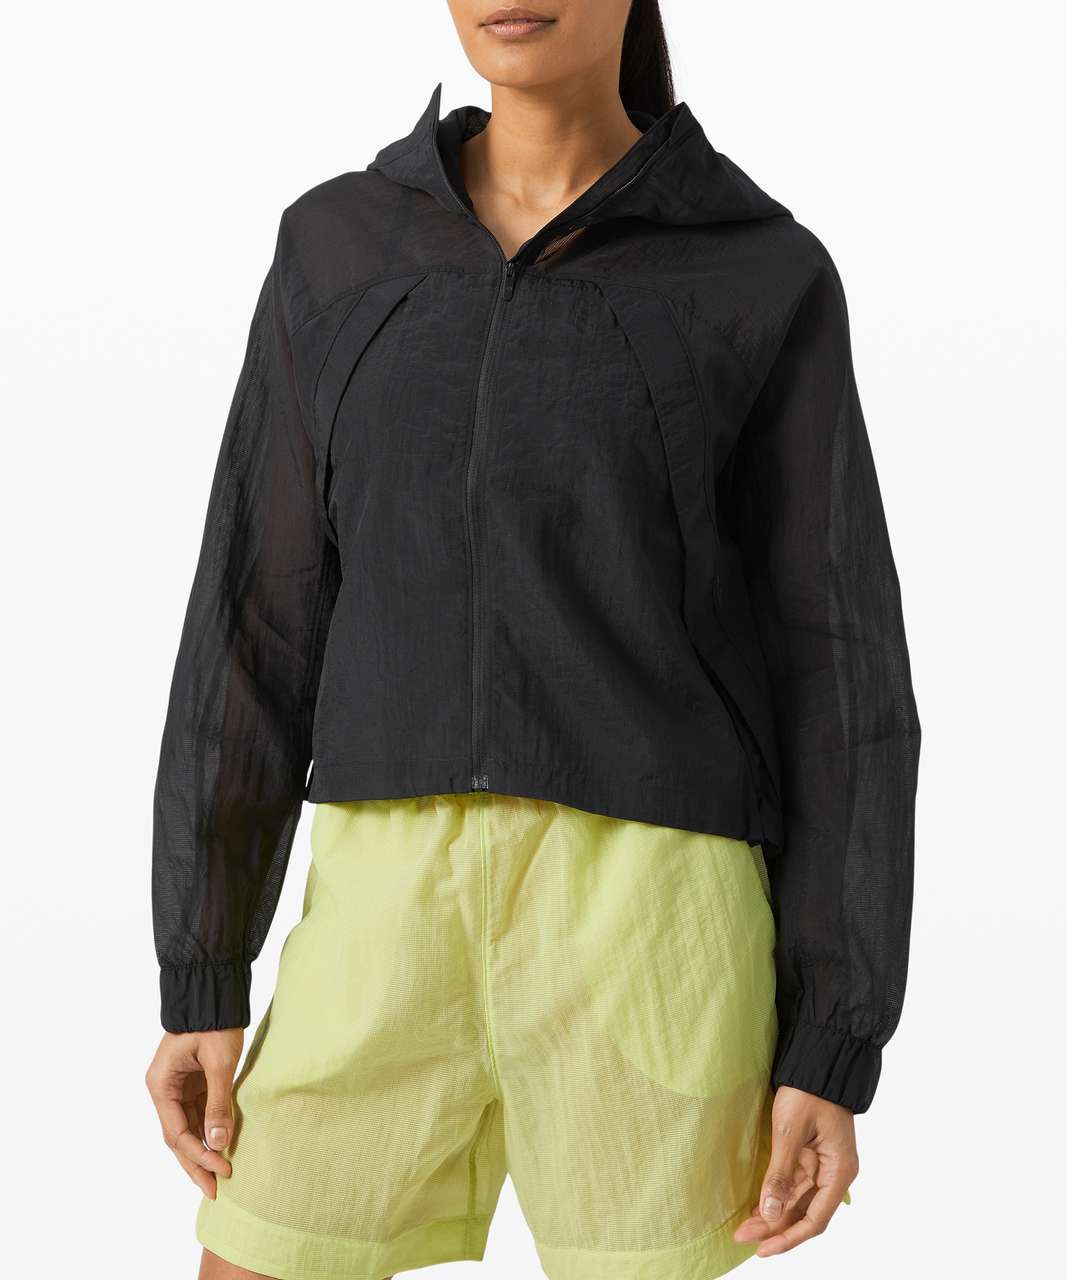 LULULEMON Womens Lightweight Water Resistant Cropped Jacket Coat Hot Pink  Size 4